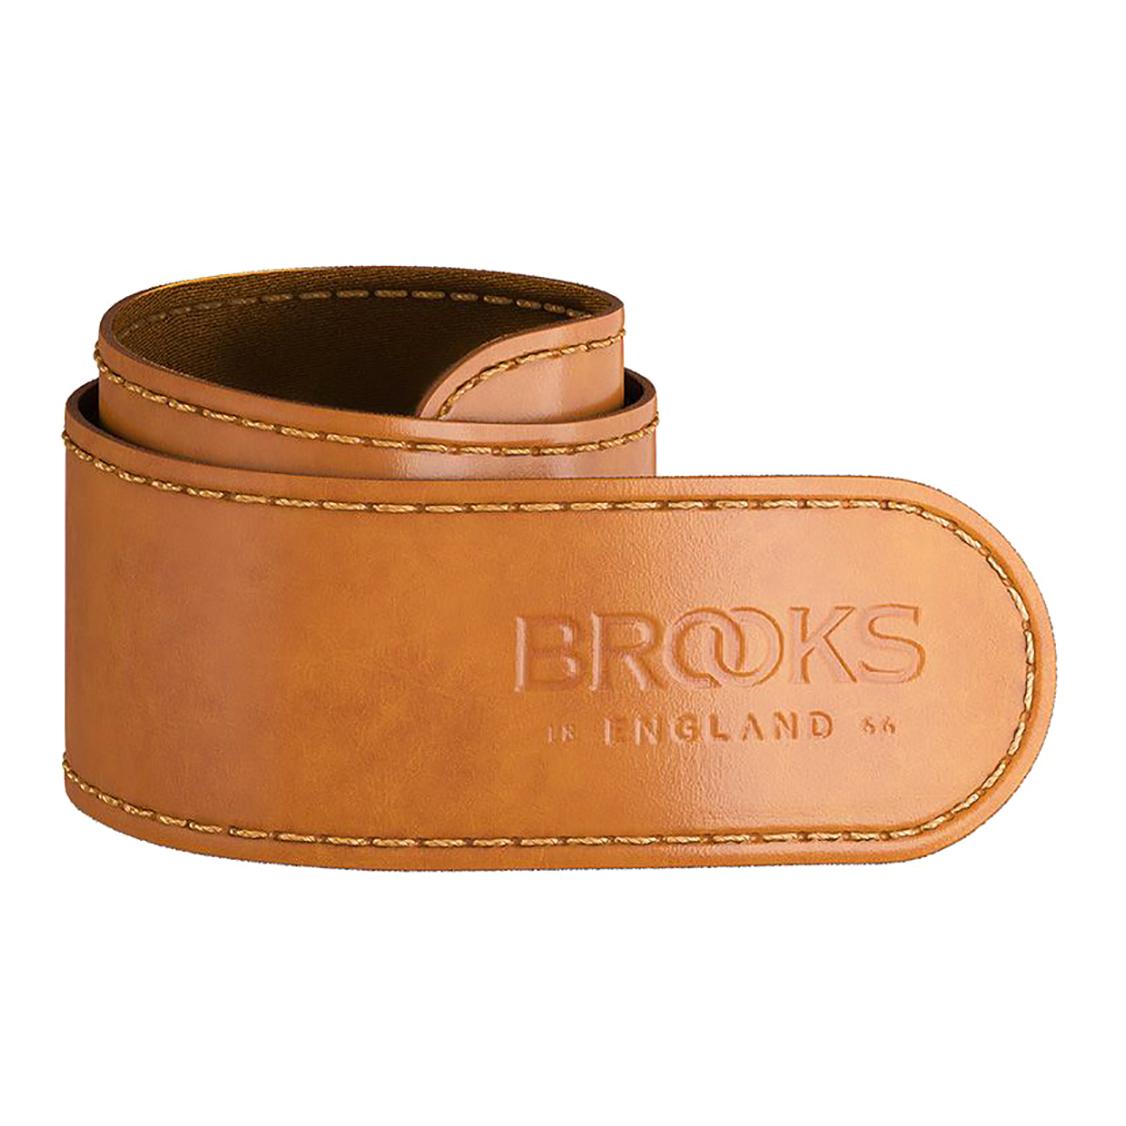 Brooks England Trousers Strap - Honey Orange 